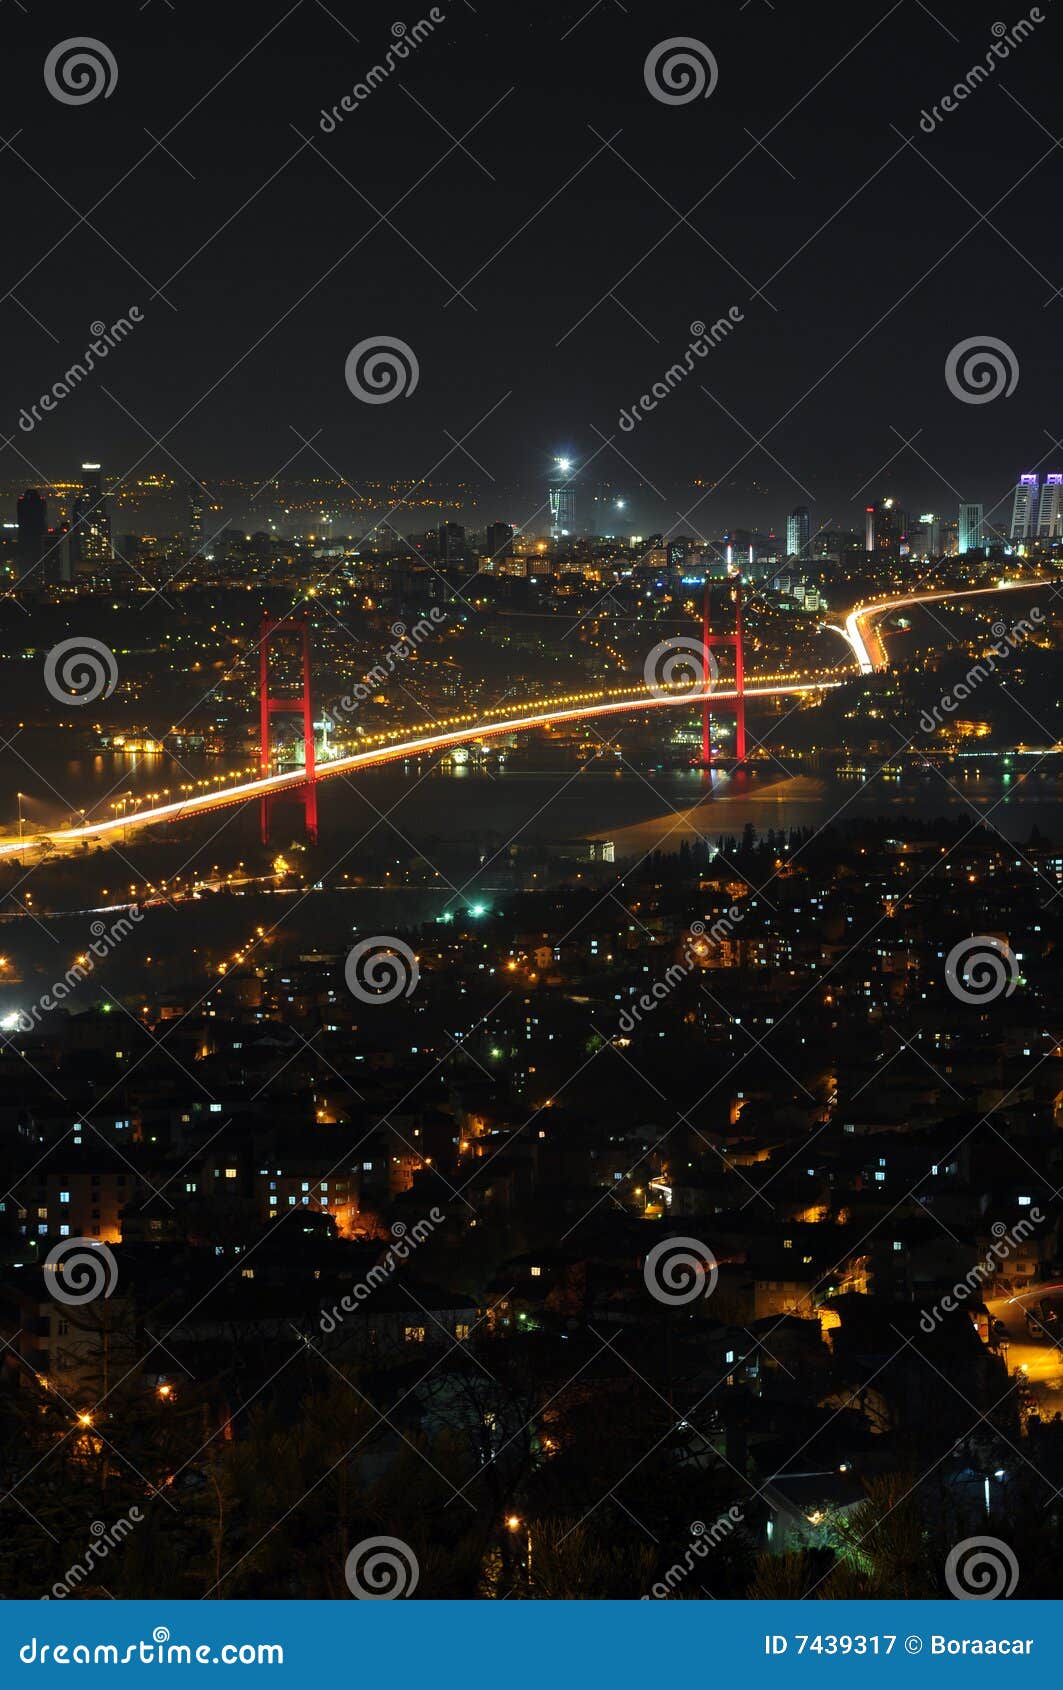 istanbul city lights and bosphorus bridge